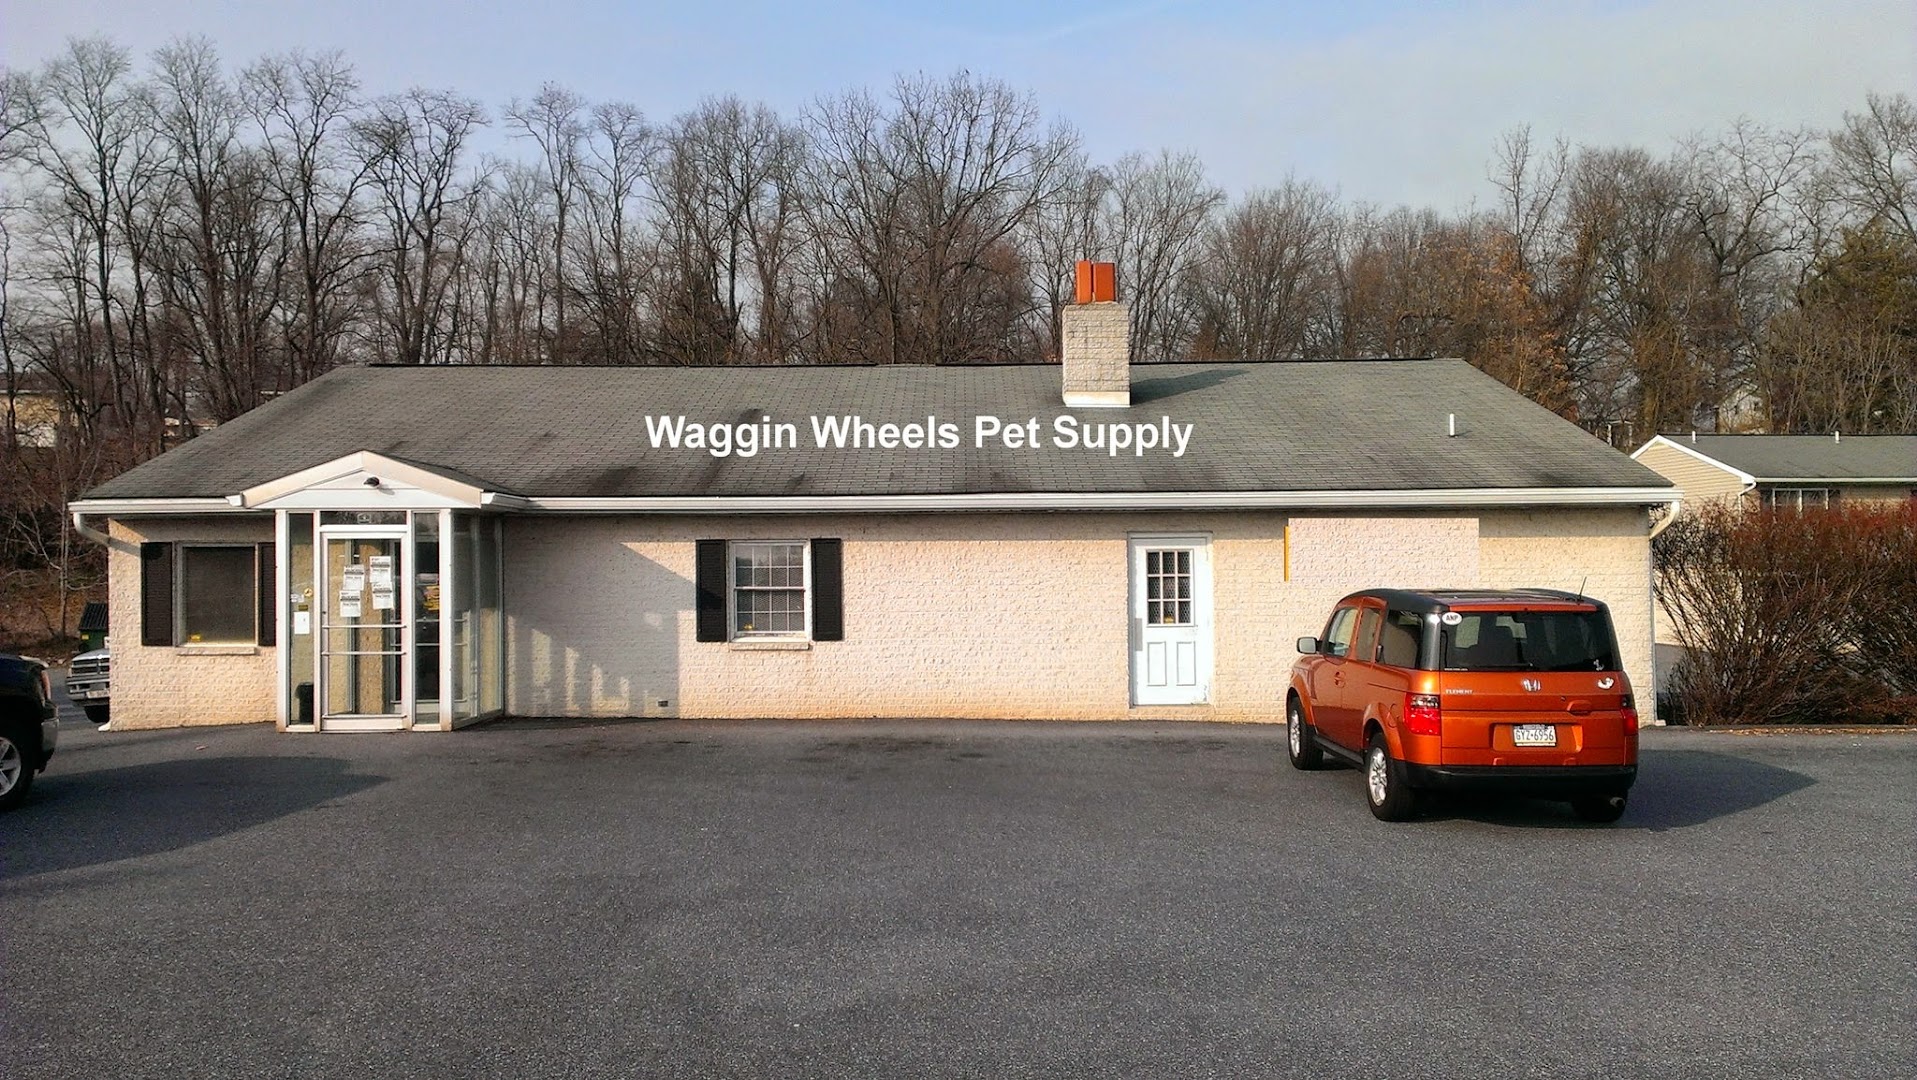 Waggin' Wheels Pet Supply